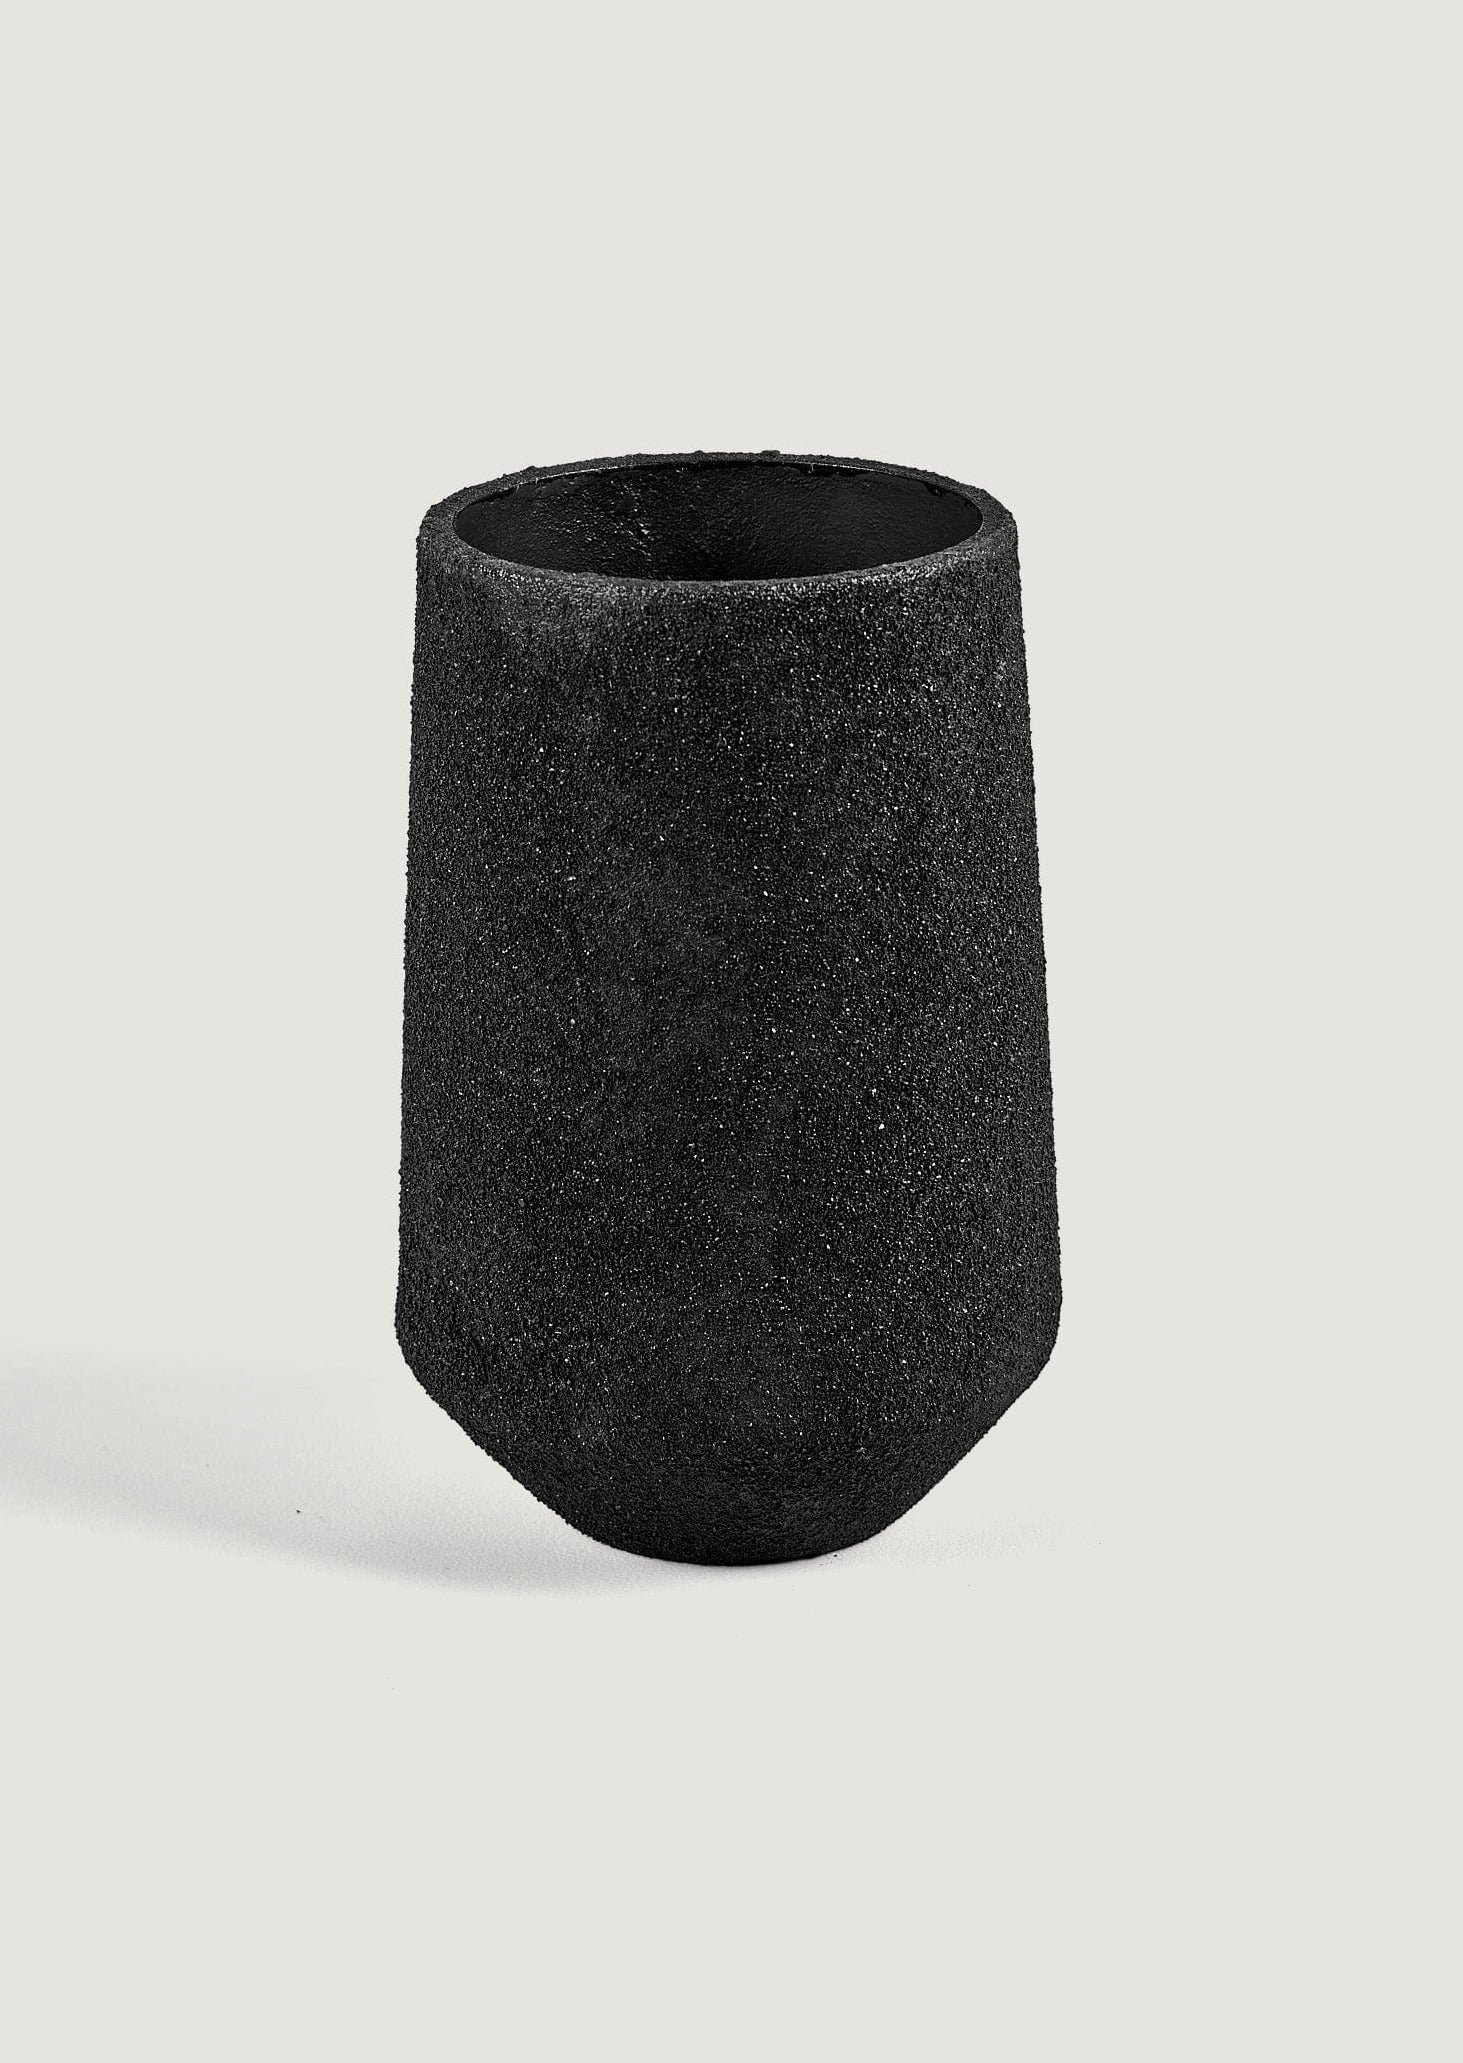 Black Metal Vase with Pumice Textured Coating at Afloral